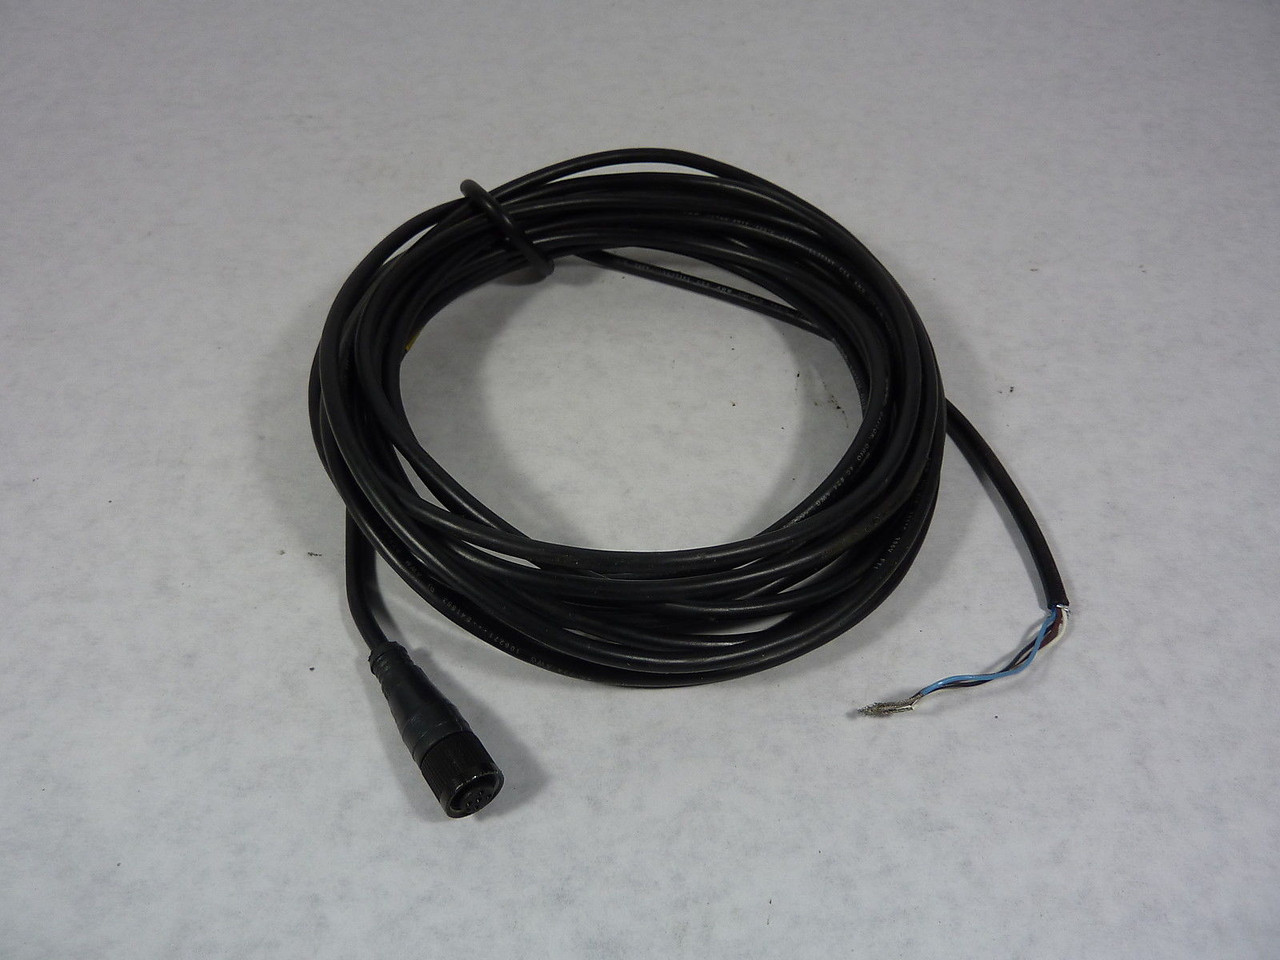 Woodhead AC130-50 Cable 5 Pole 250VDC 4A USED